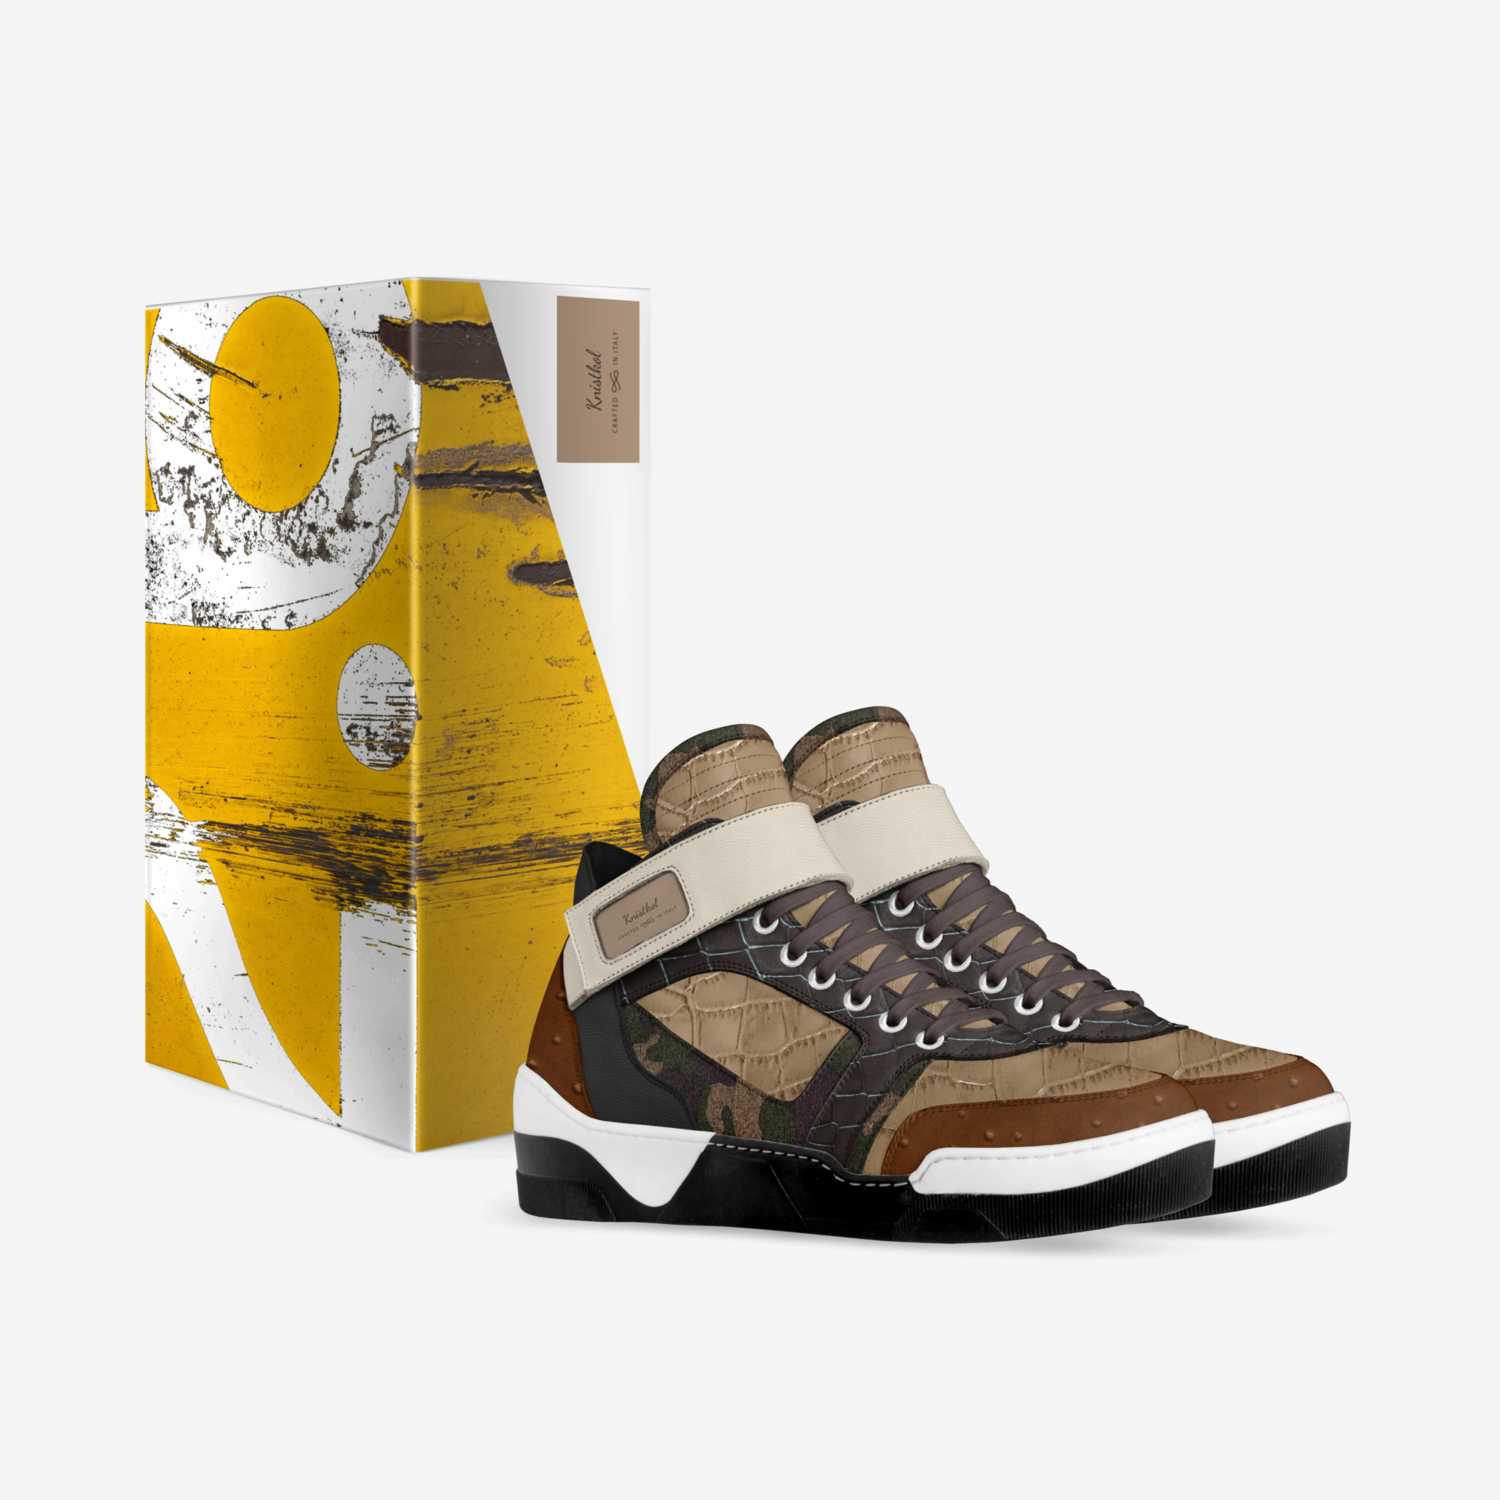 Knistkol custom made in Italy shoes by Ricardo Velasquez | Box view